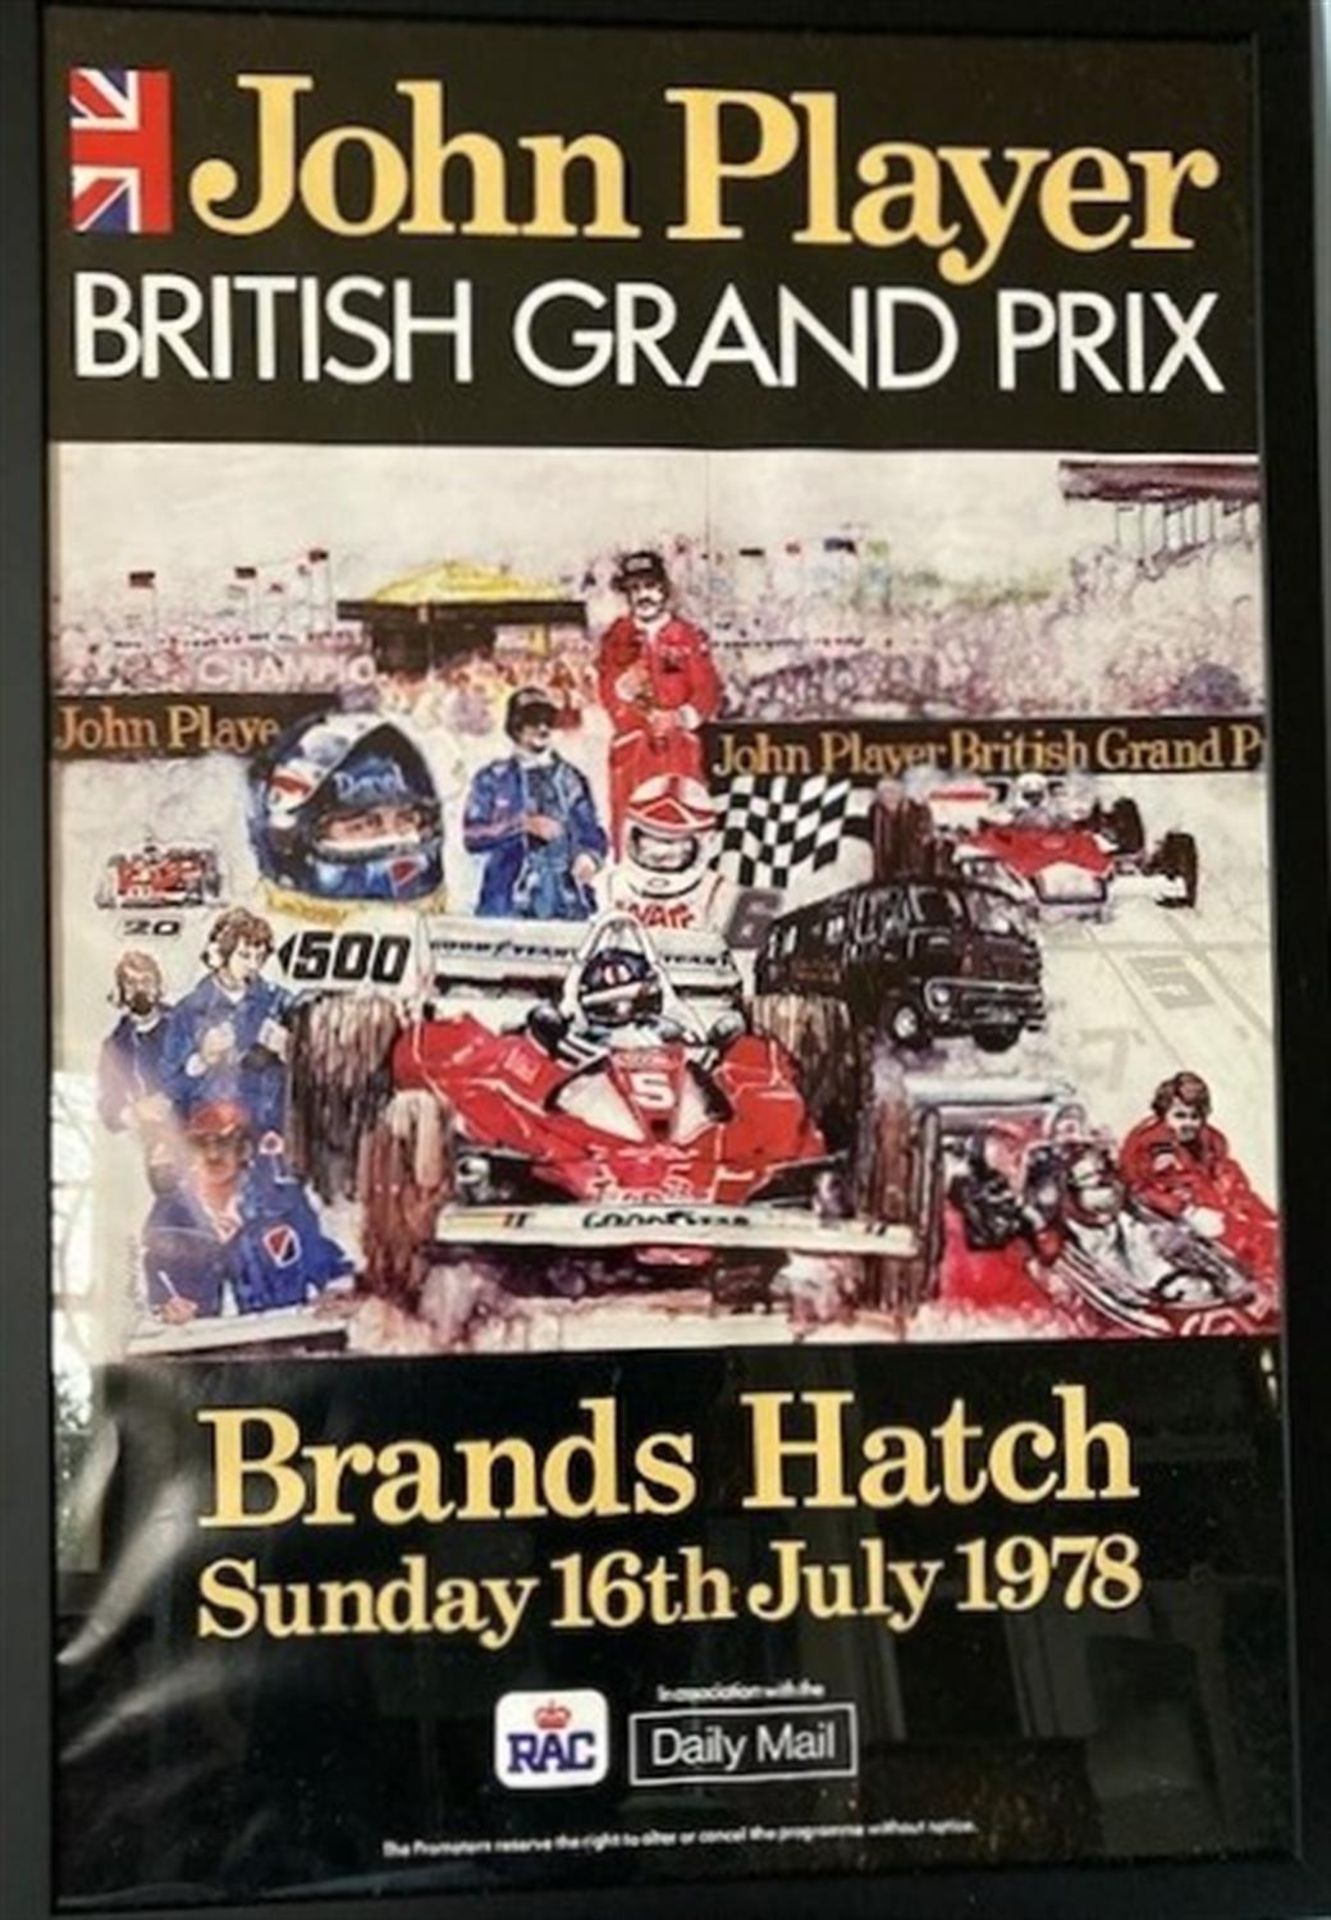 1978 Brands Hatch British Grand Prix Promotional Poster - Image 3 of 3